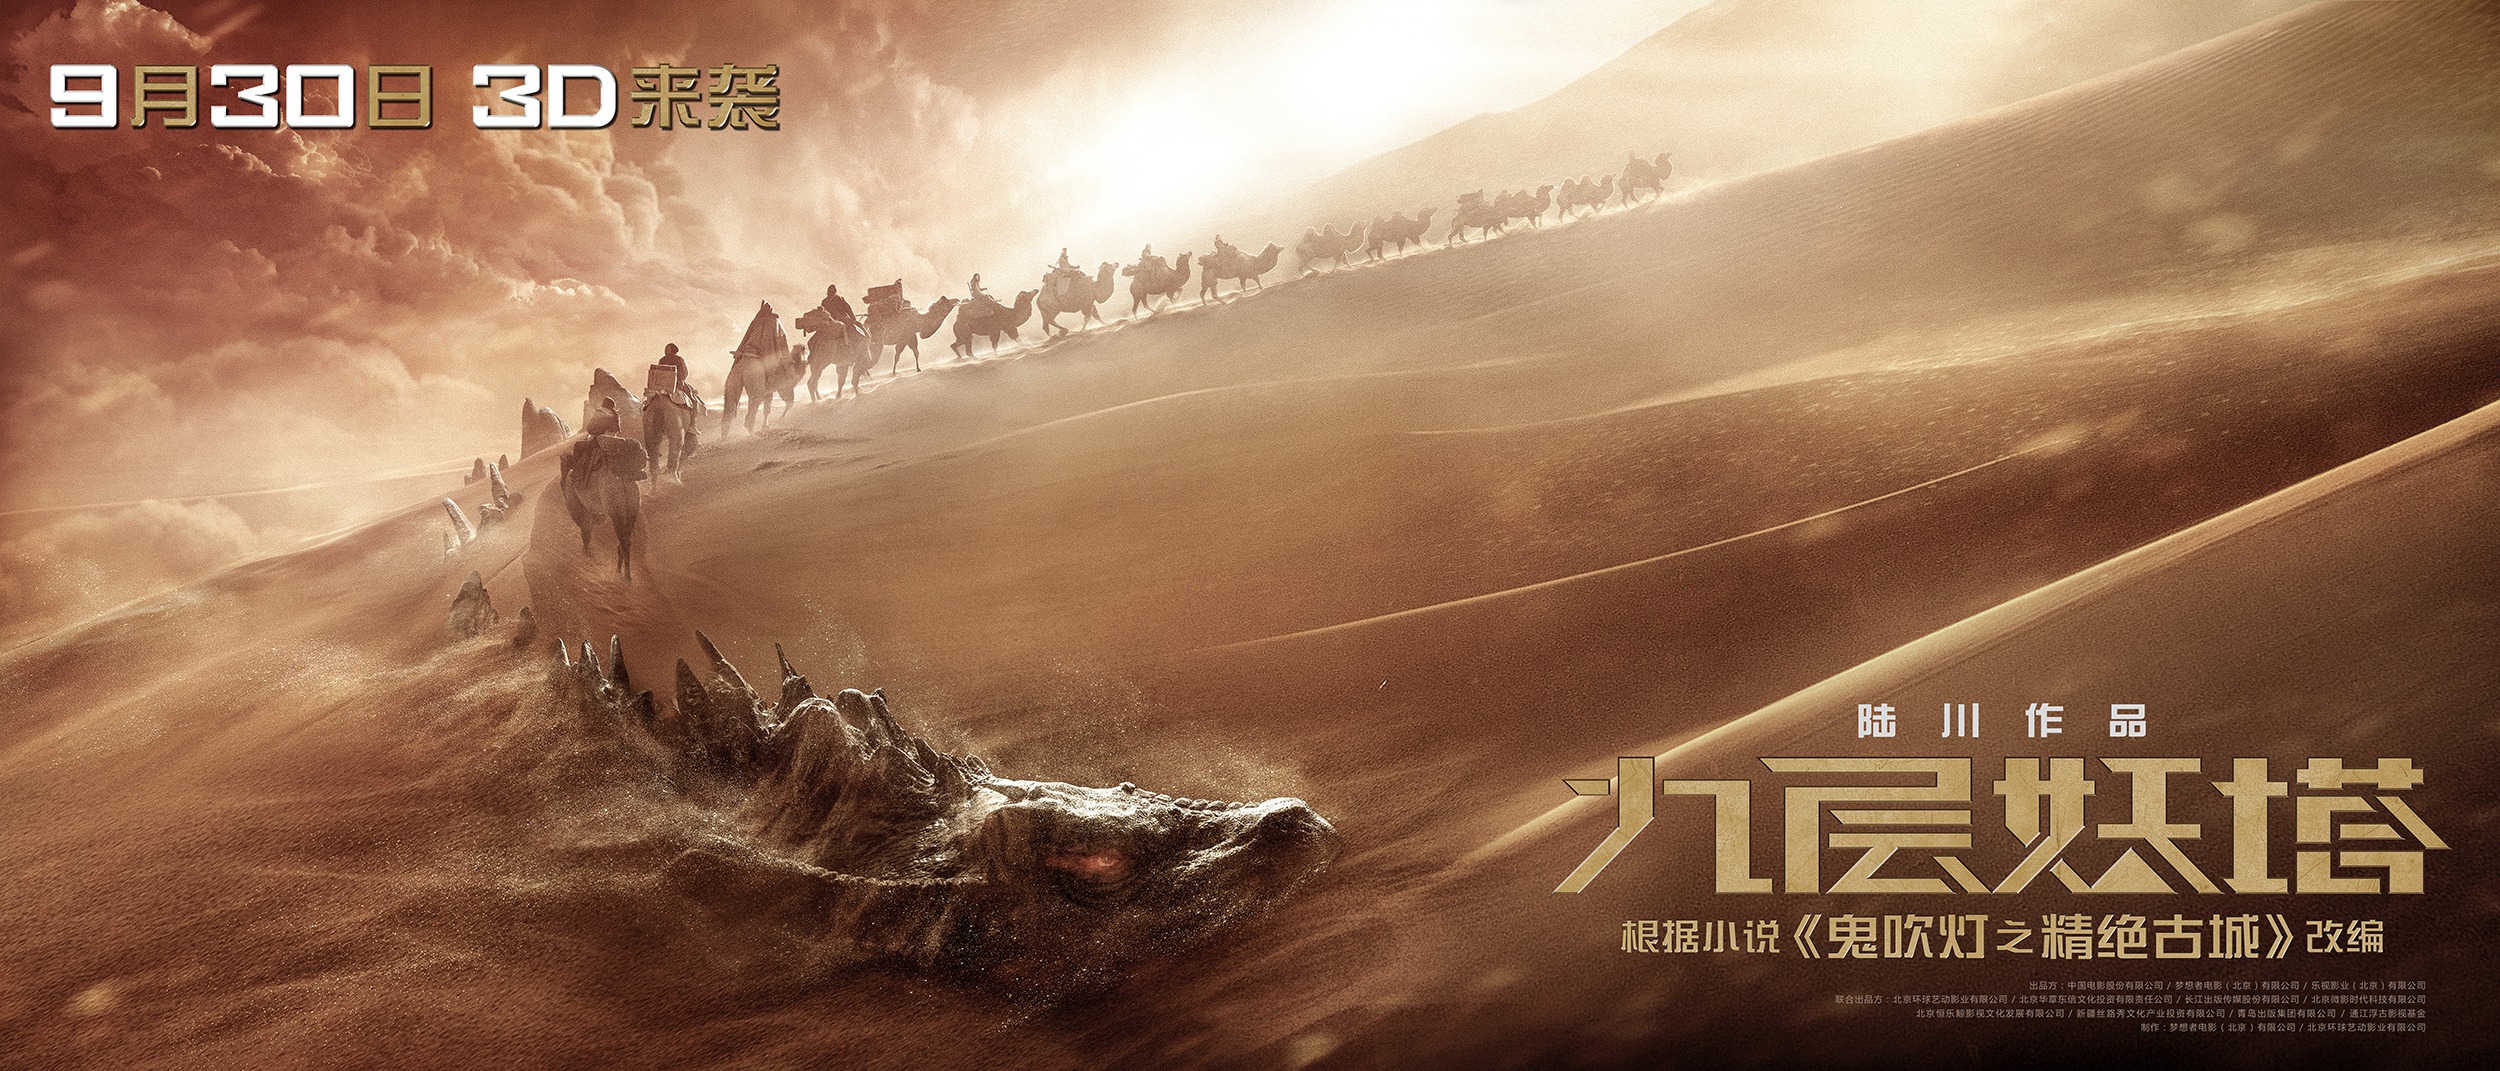 Mega Sized Movie Poster Image for Jiu ceng yao ta (#2 of 2)